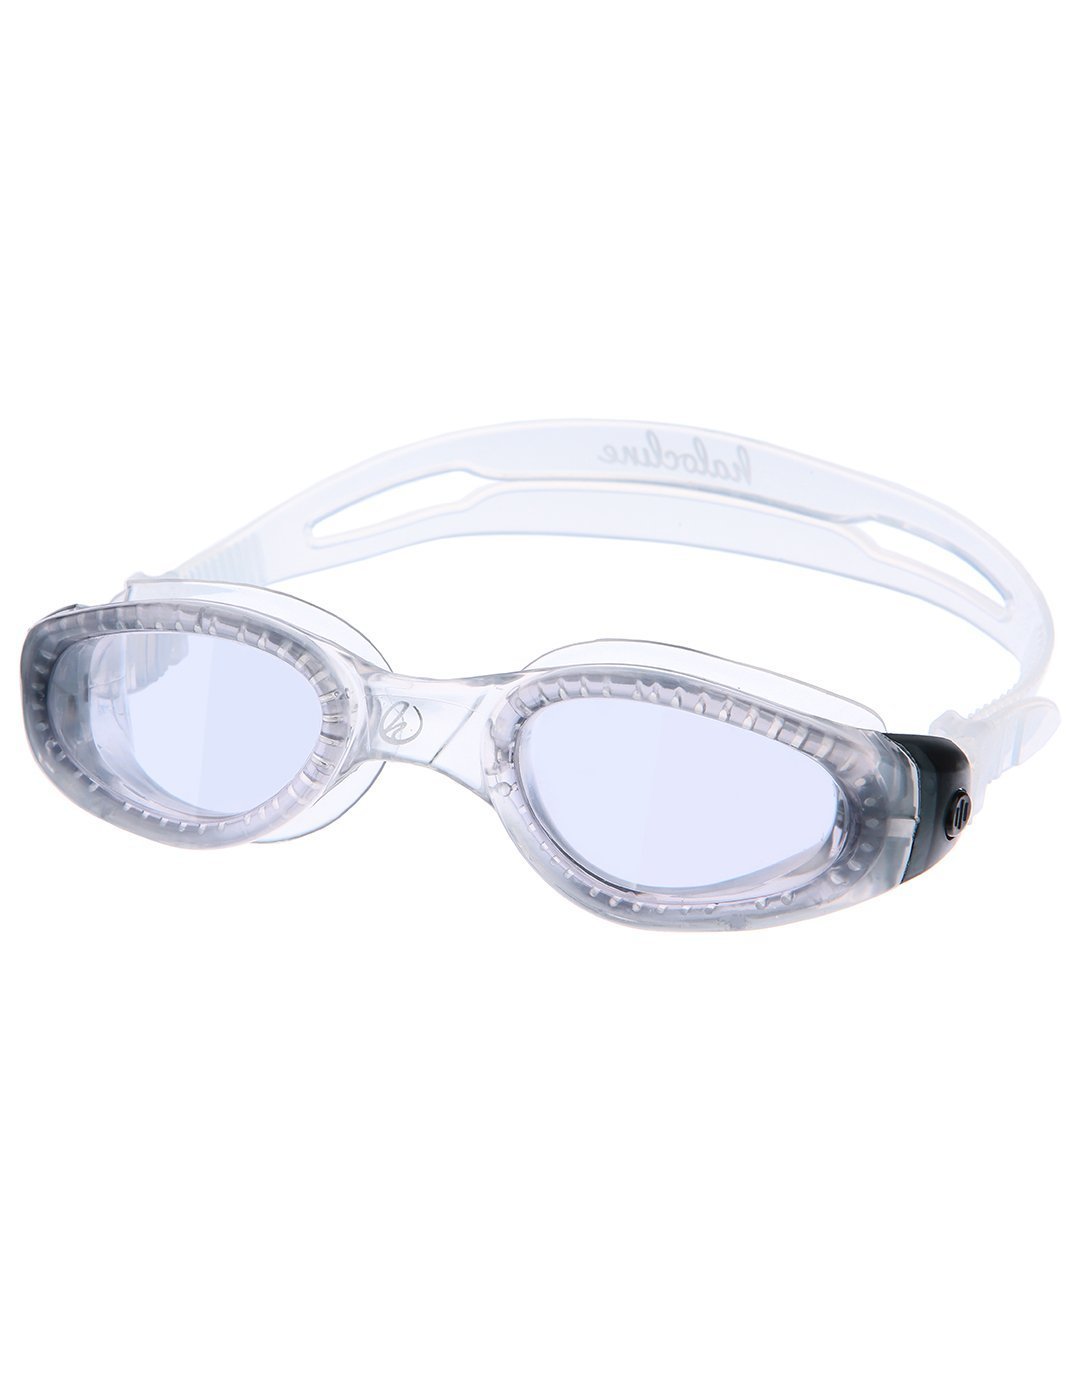 Halocline Comfort Plus Swimming Goggles